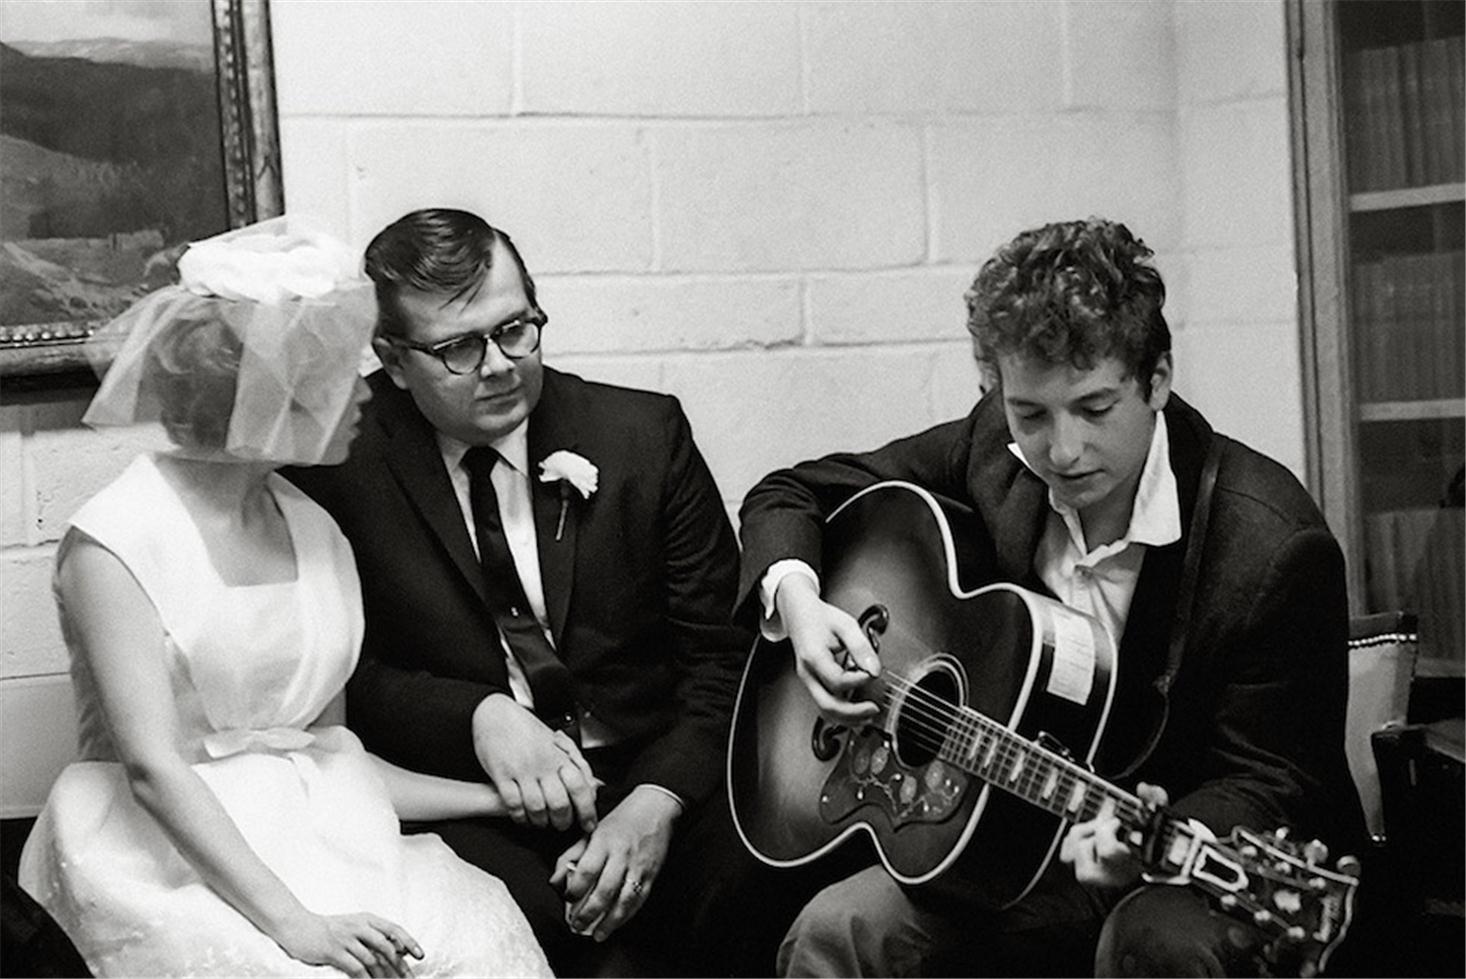 Wedding ideas - Bob Dylan serenading to bride and groom at wedding